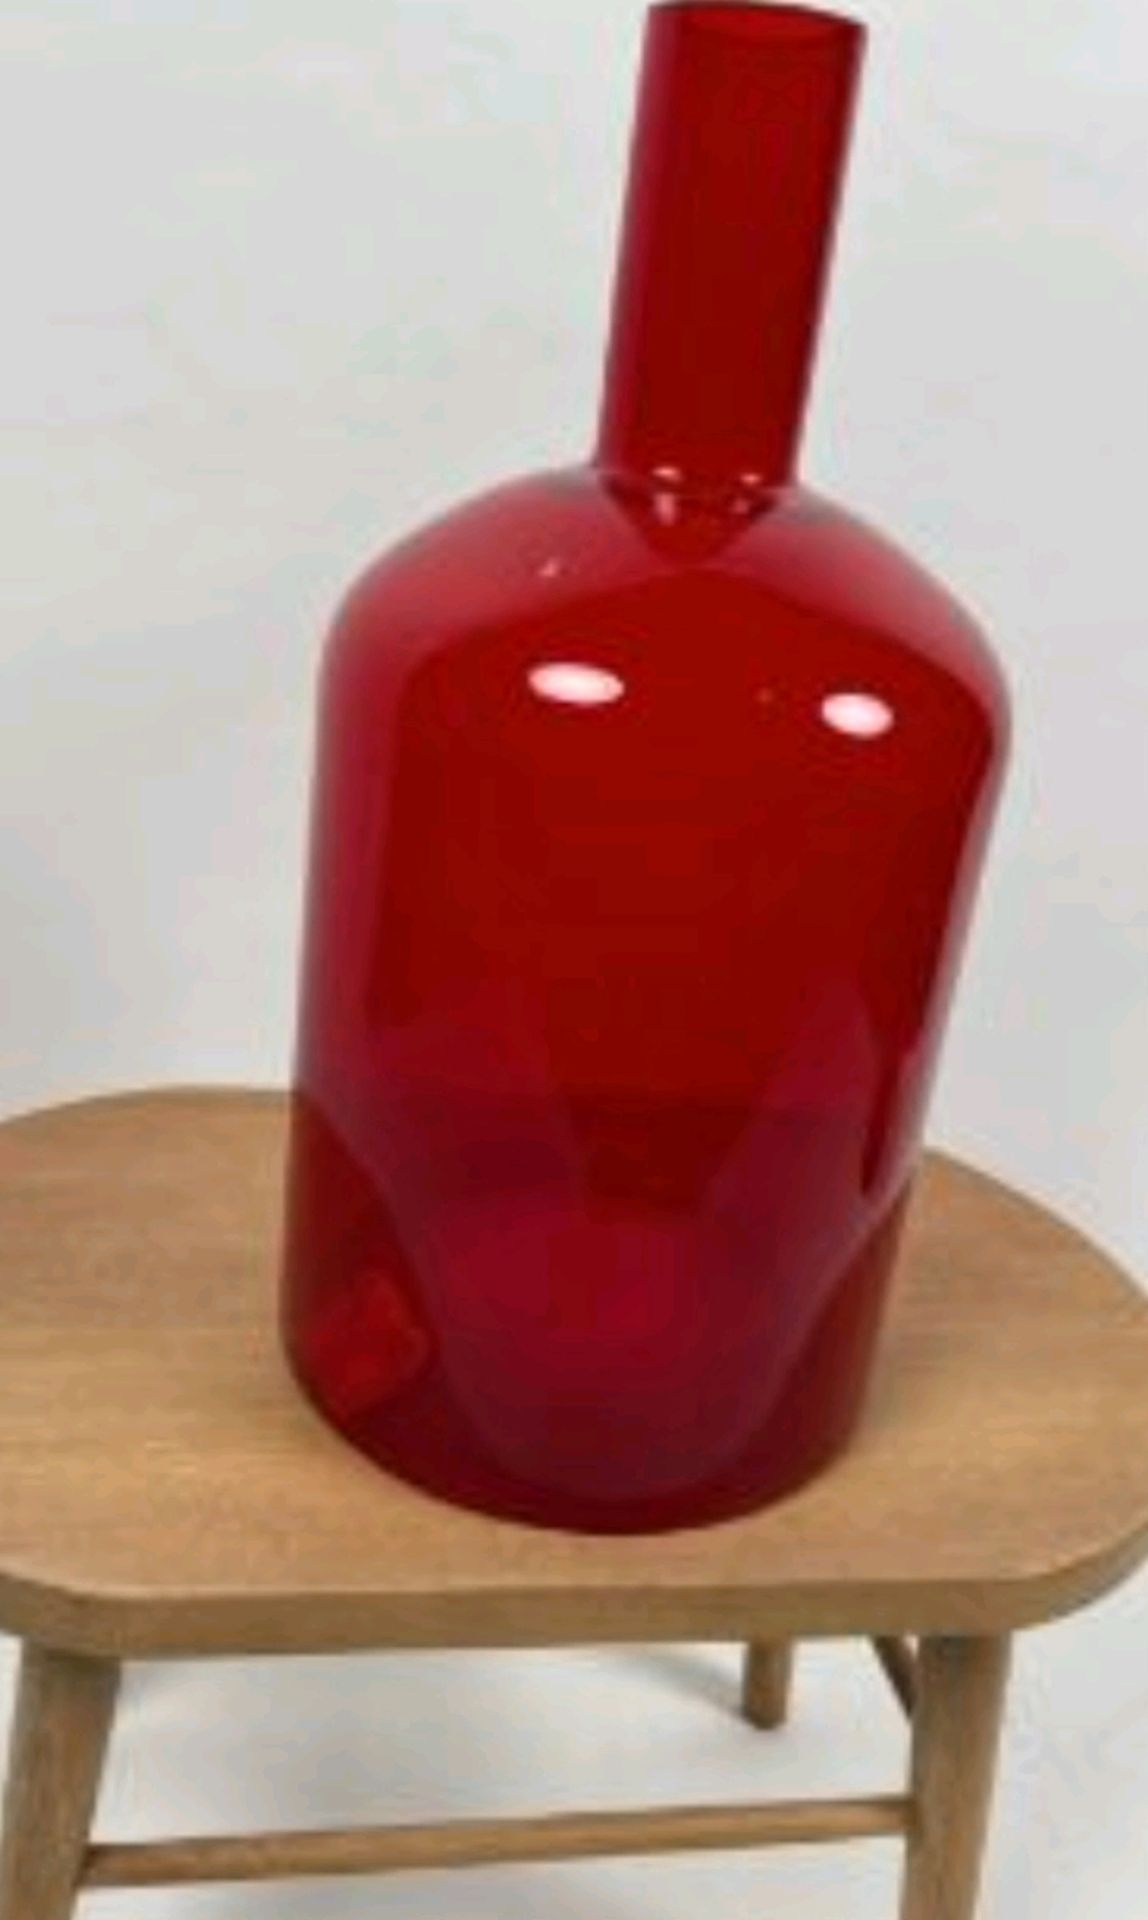 Iconic Pols Potten Bubble Bottle - Image 2 of 3